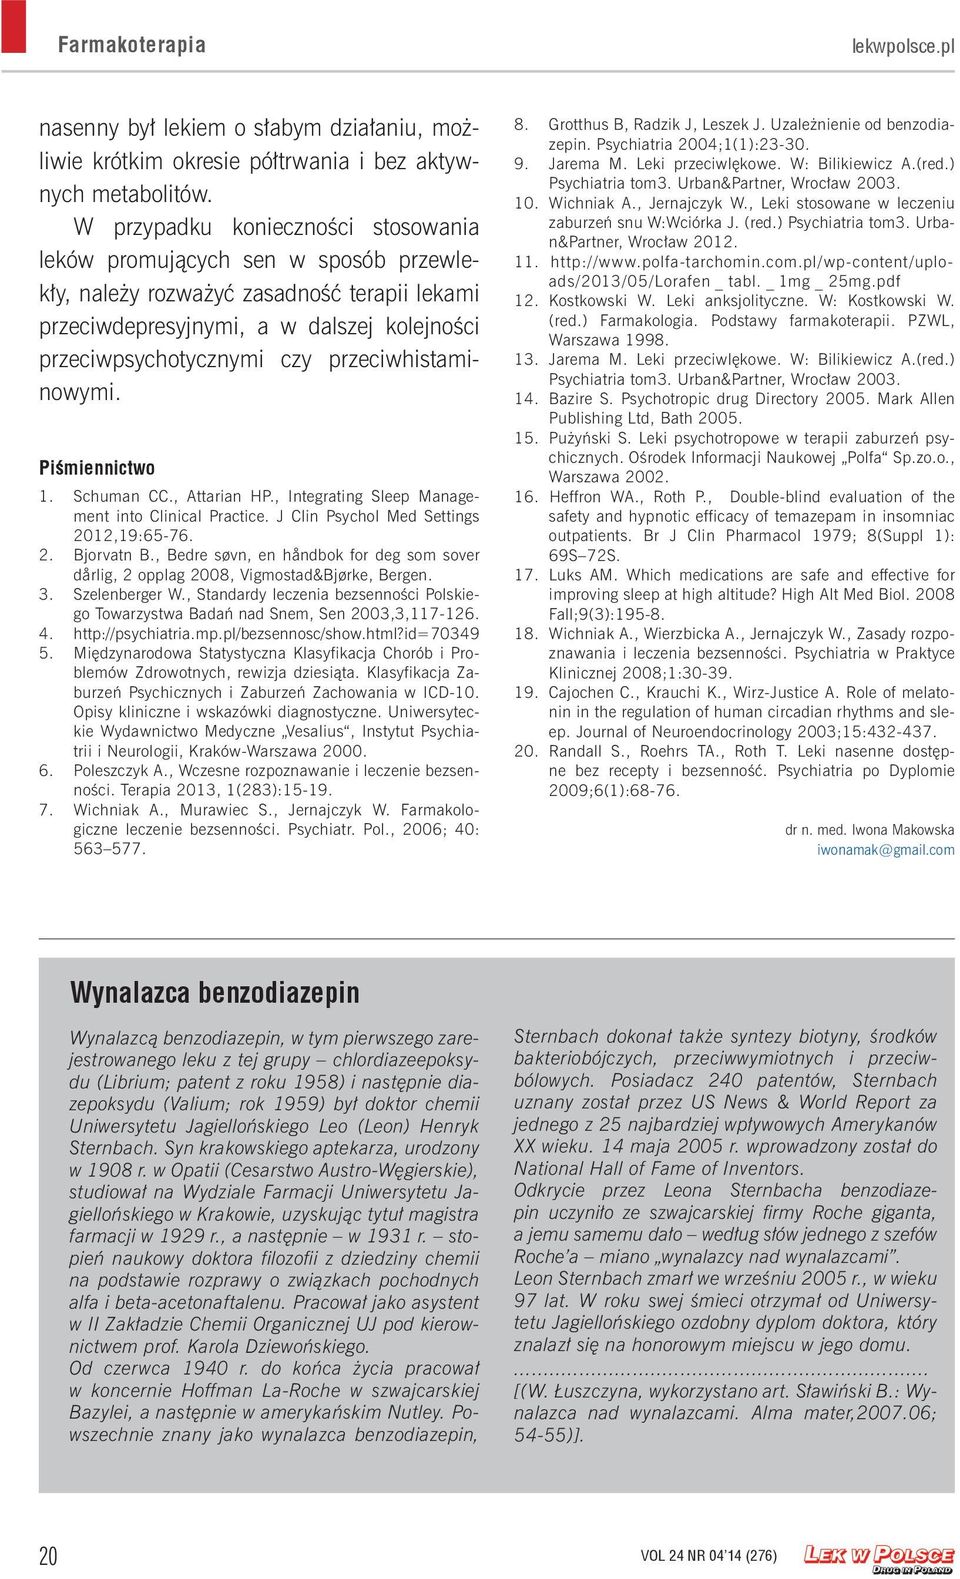 przeciwhistaminowymi. Piśmiennictwo 1. Schuman CC., Attarian HP., Integrating Sleep Management into Clinical Practice. J Clin Psychol Med Settings 2012,19:65-76. 2. Bjorvatn B.